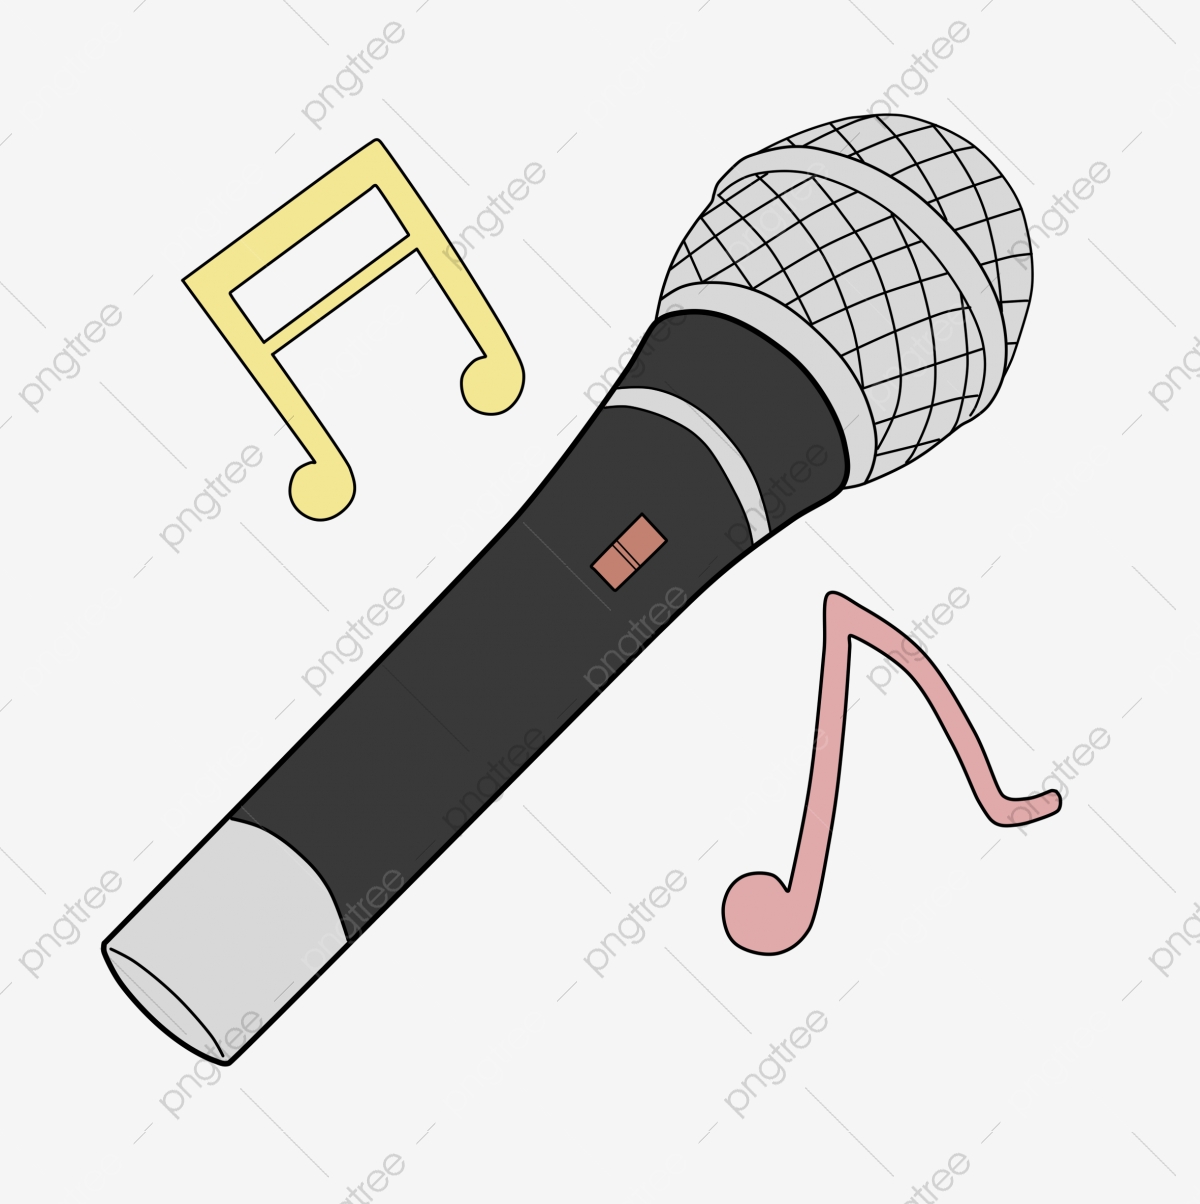 karaoke clipart simple microphone